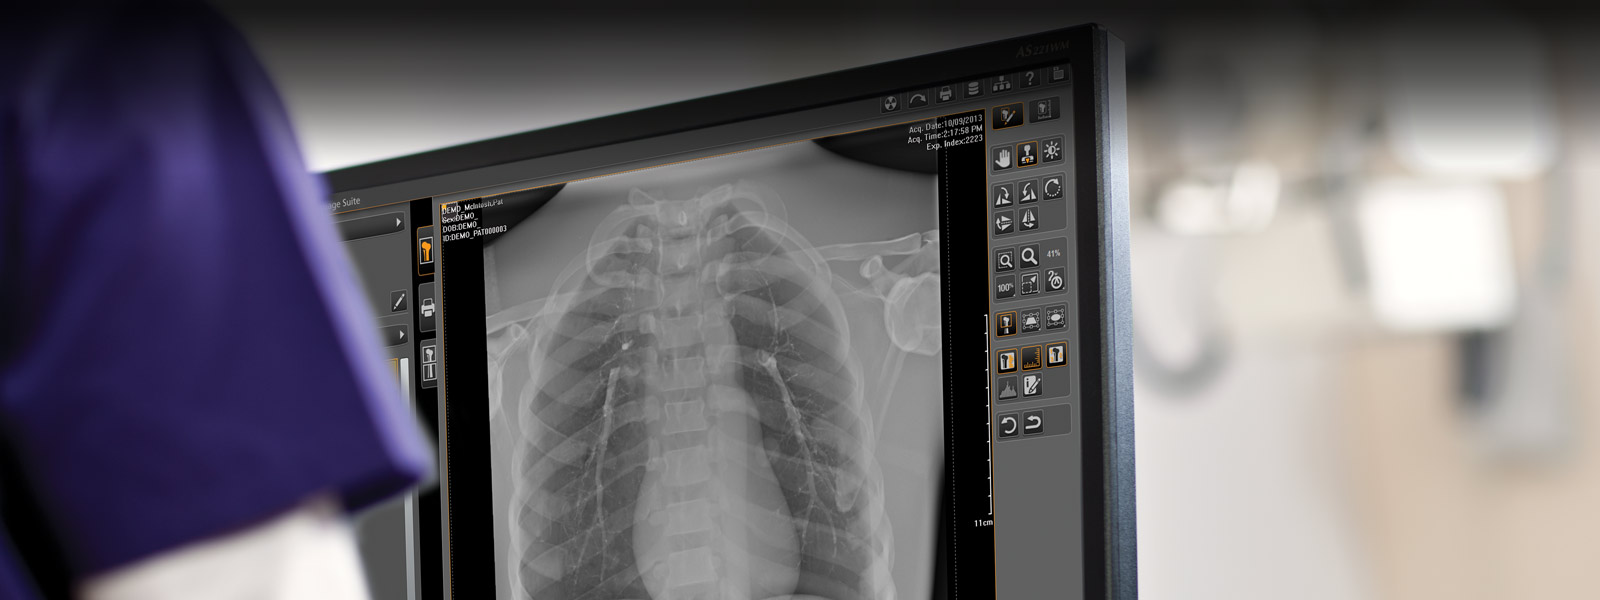 kodak dental imaging software viewer download free